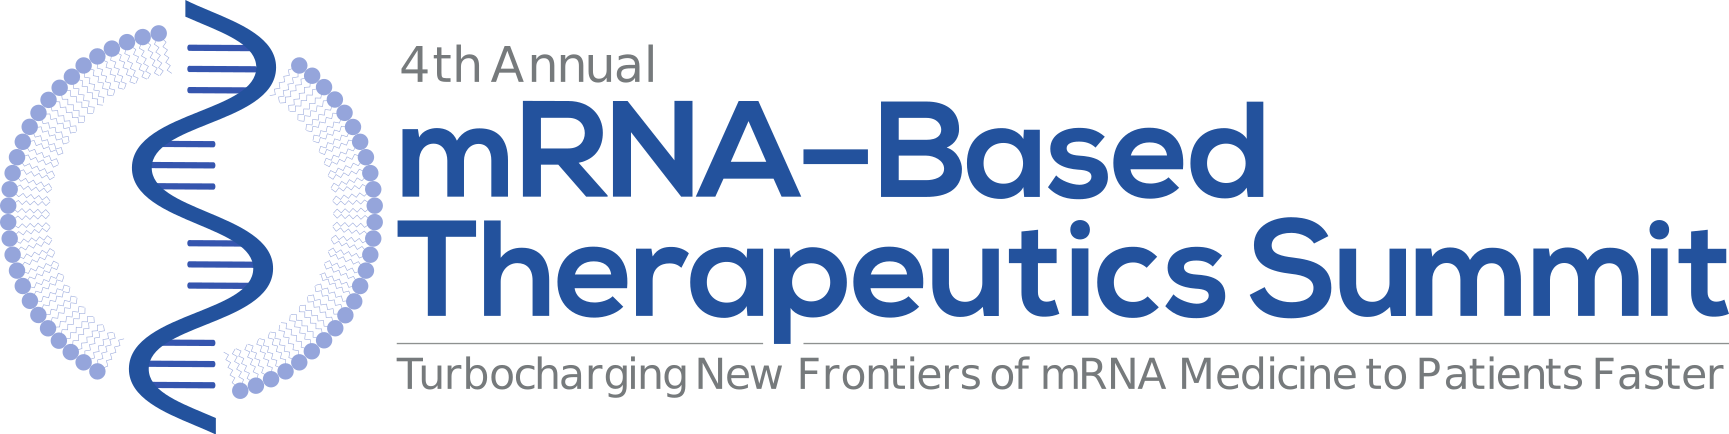 HW230707 - 4th mRNA-Based Therapeutics Summit logo (1)